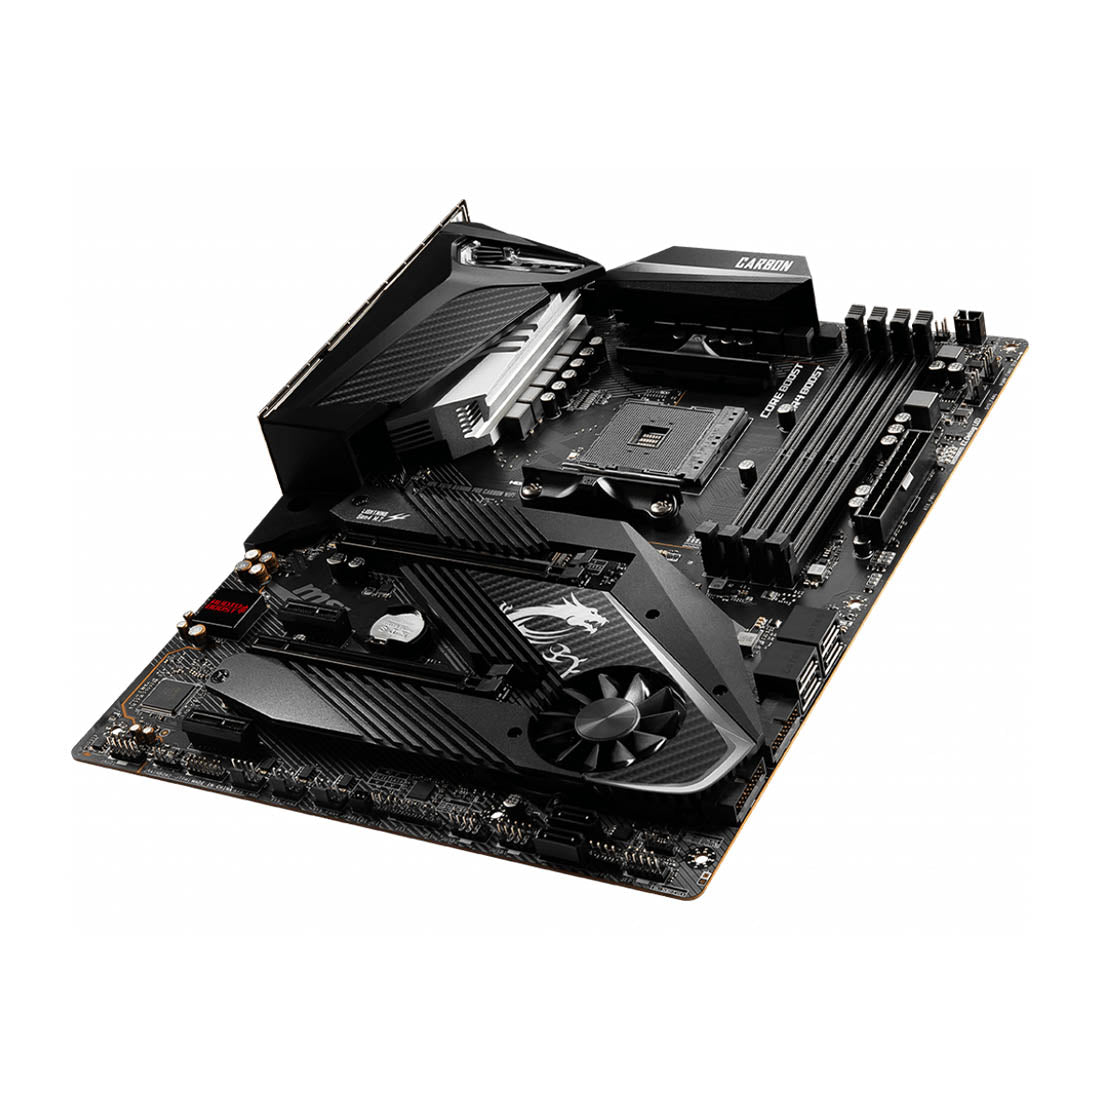 MSI MPG X570 गेमिंग प्रो कार्बन WiFi AMD AM4 सॉकेट DDR4 PCIe 4 ATX मदरबोर्ड